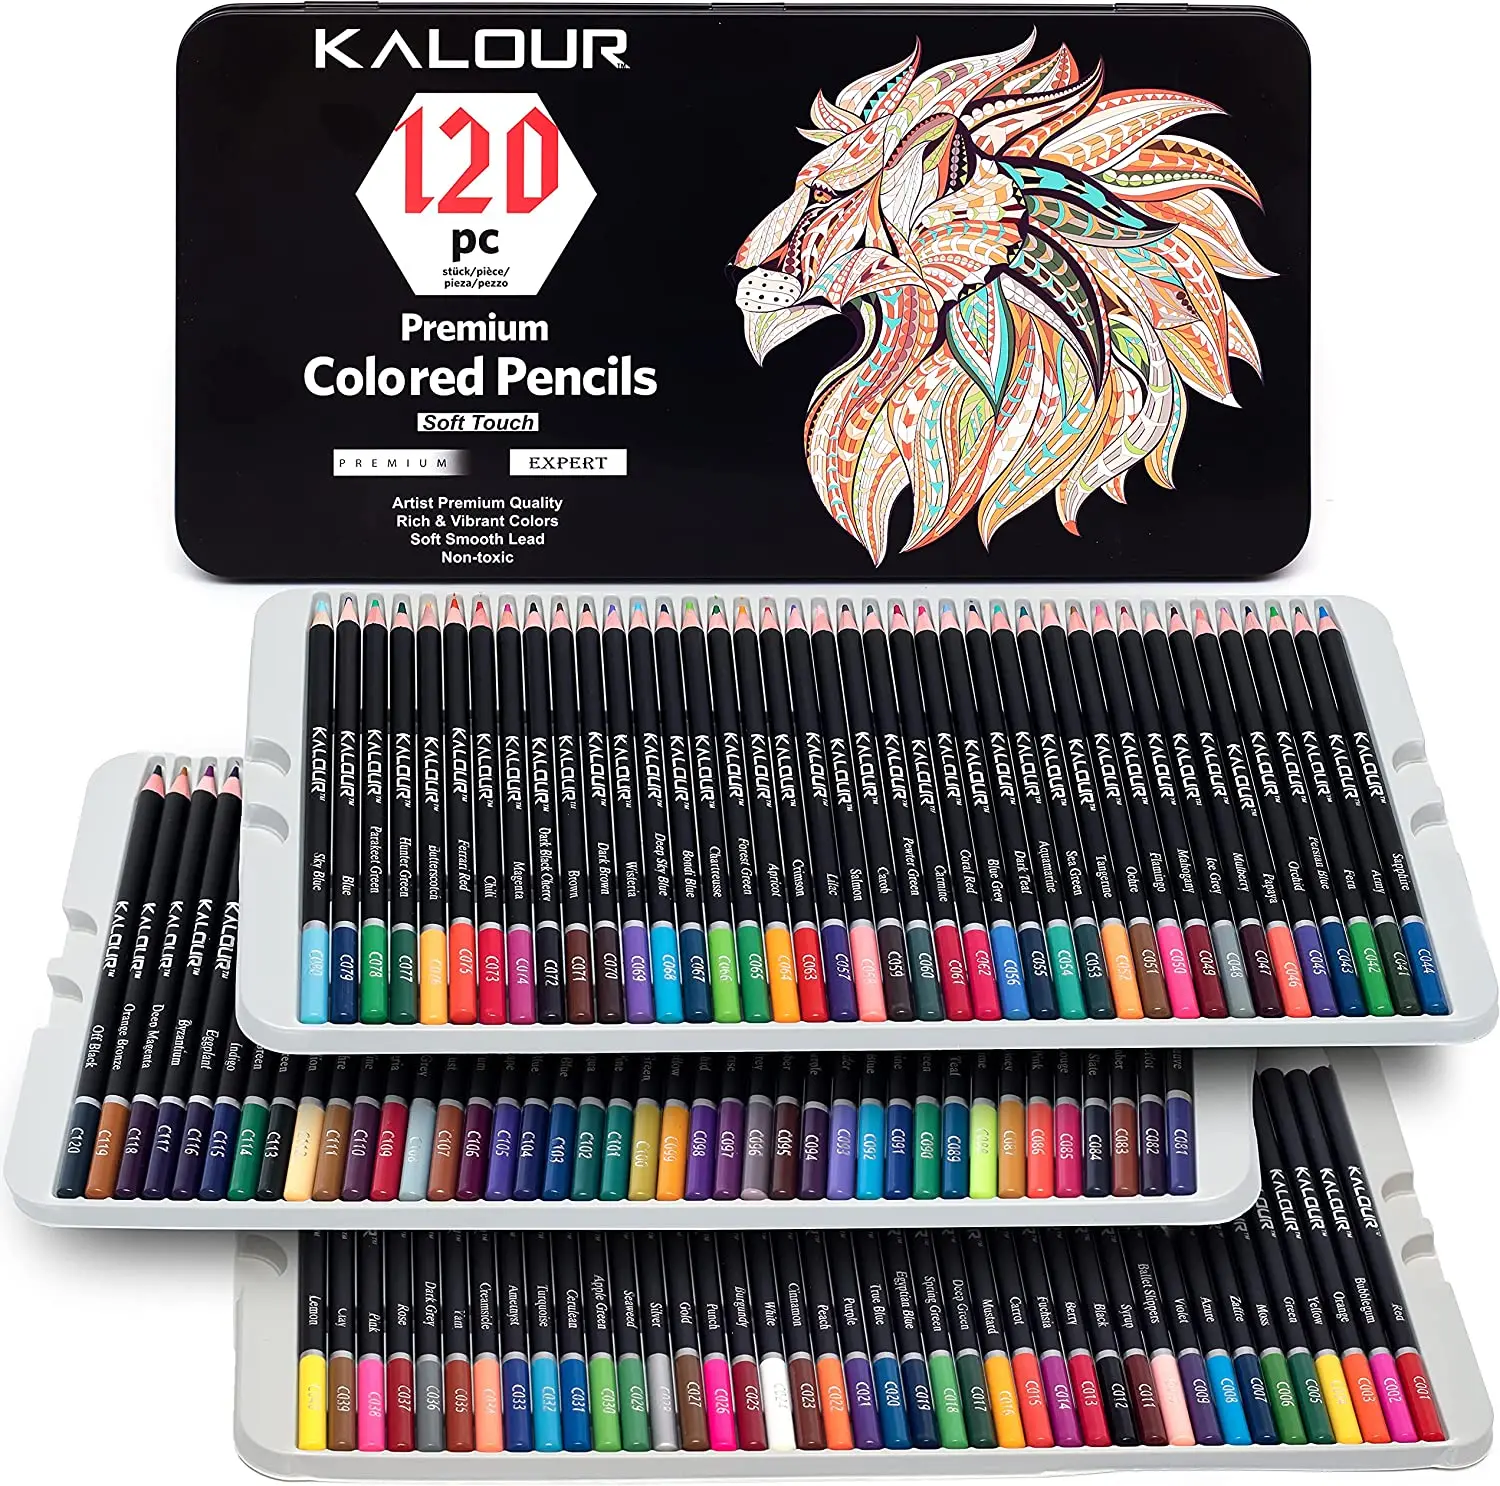 120 Premium Colored Pencils Set for Adult Coloring Books - Soft